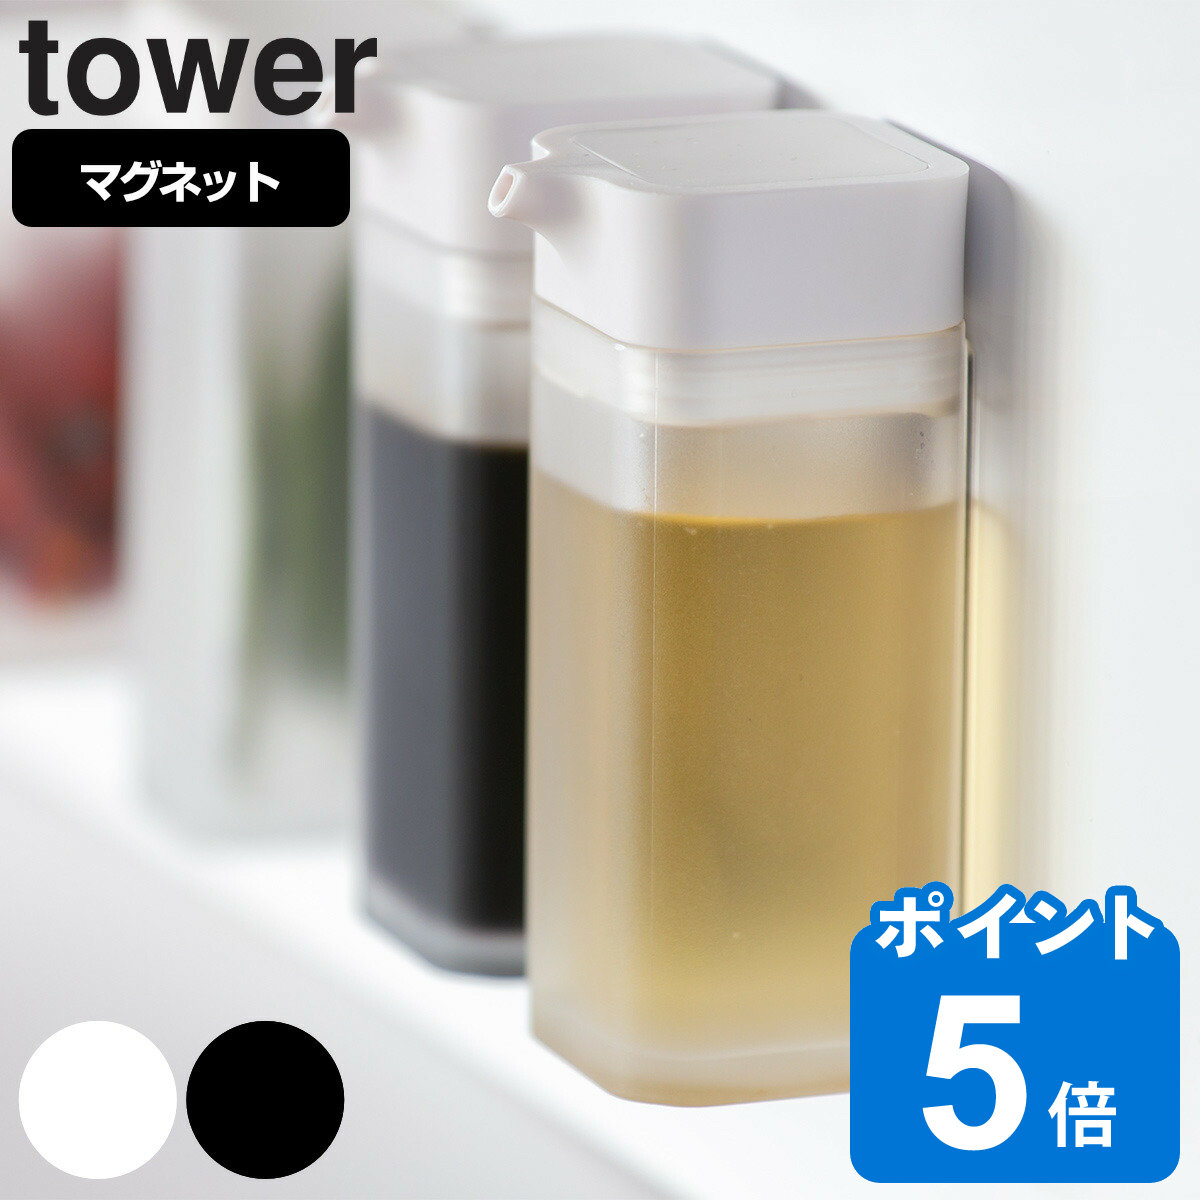 tower マグネットプッシュ式醤油差し タワー